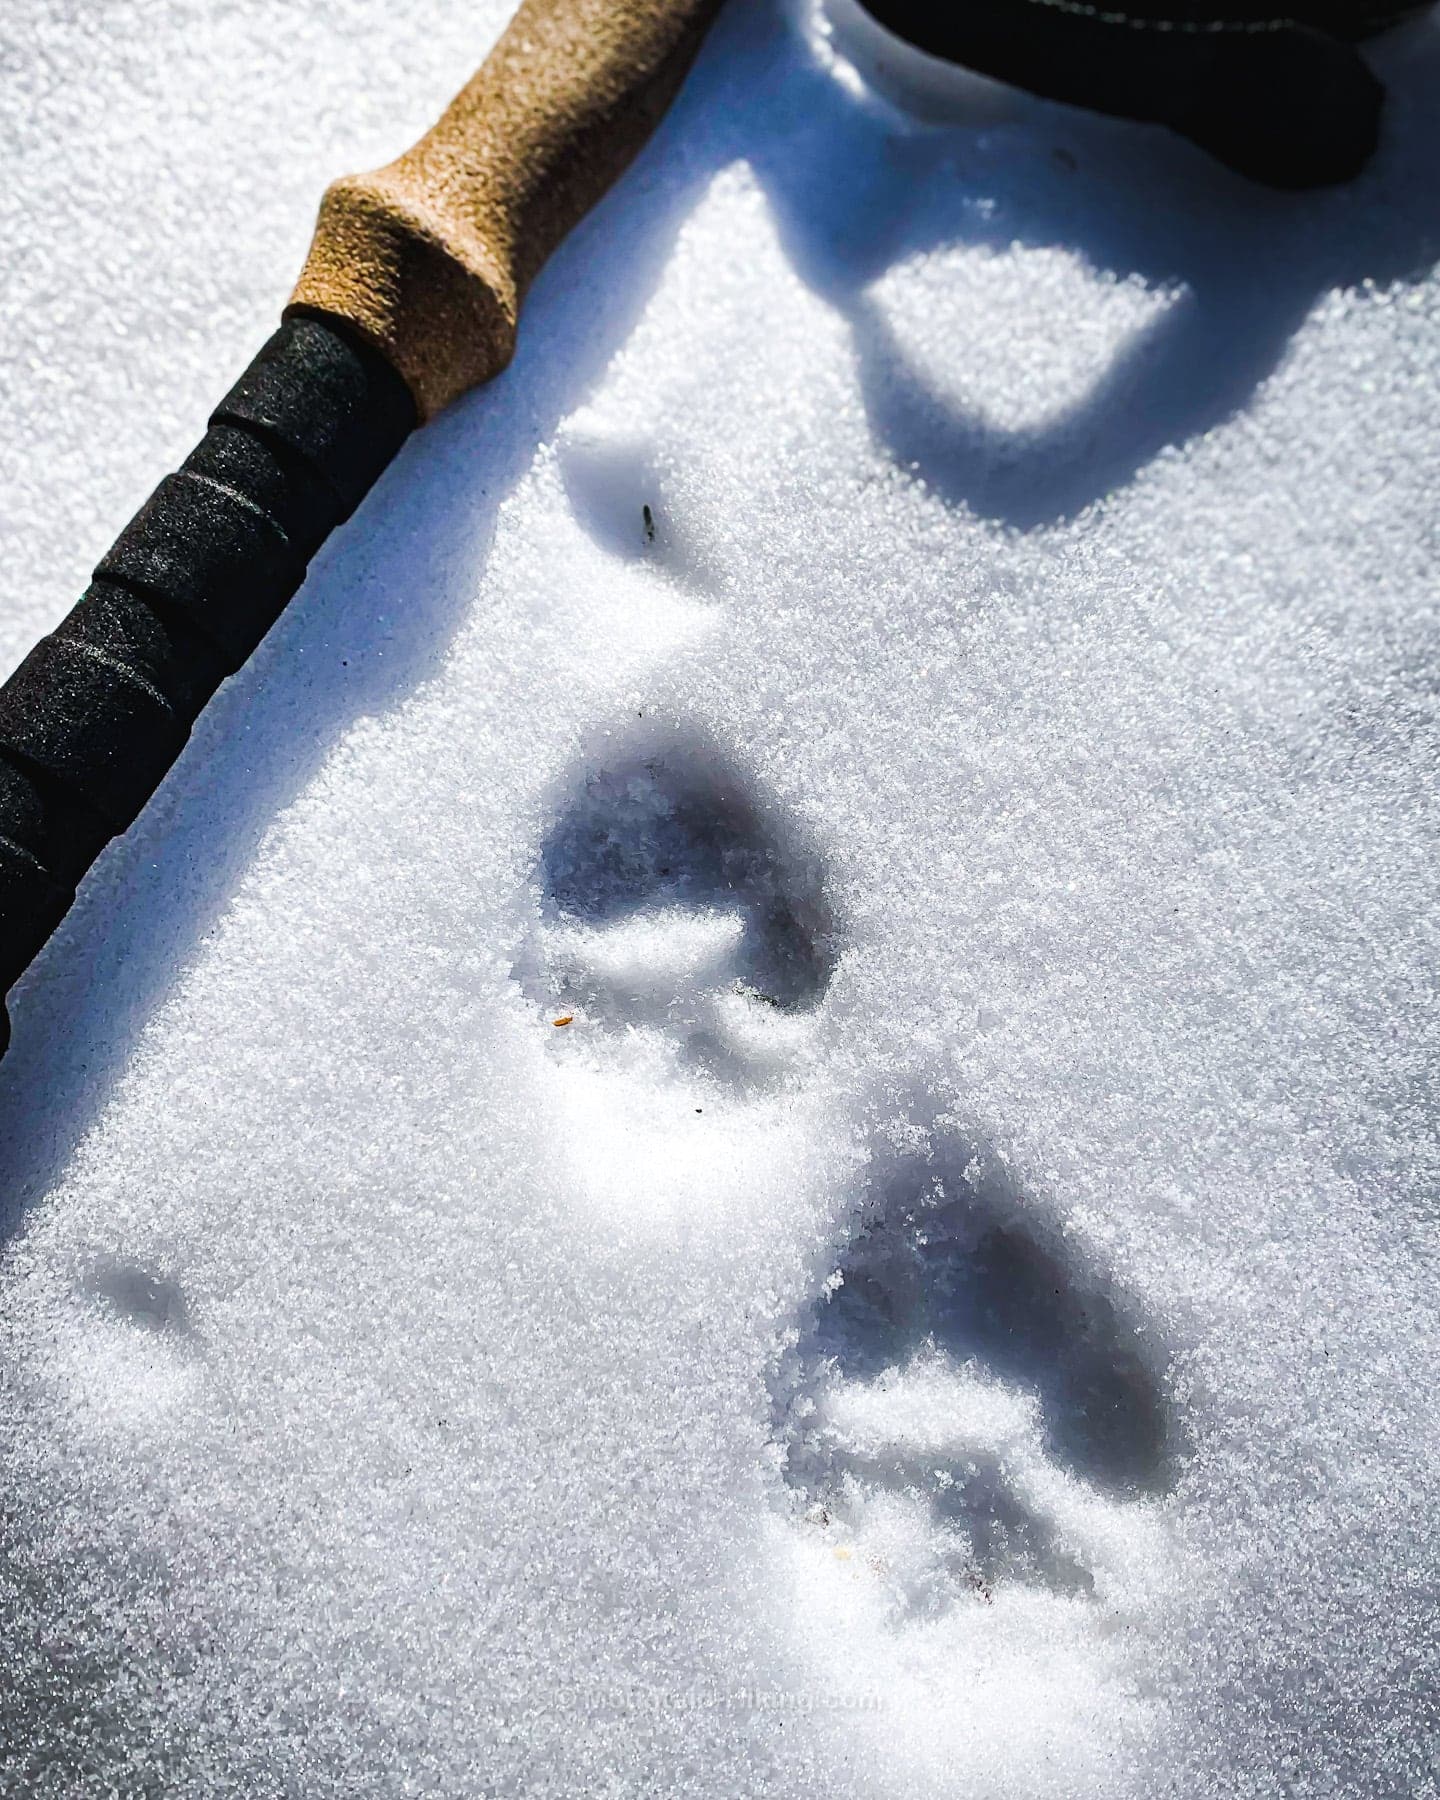 bobcat prints in snow near hiking pole